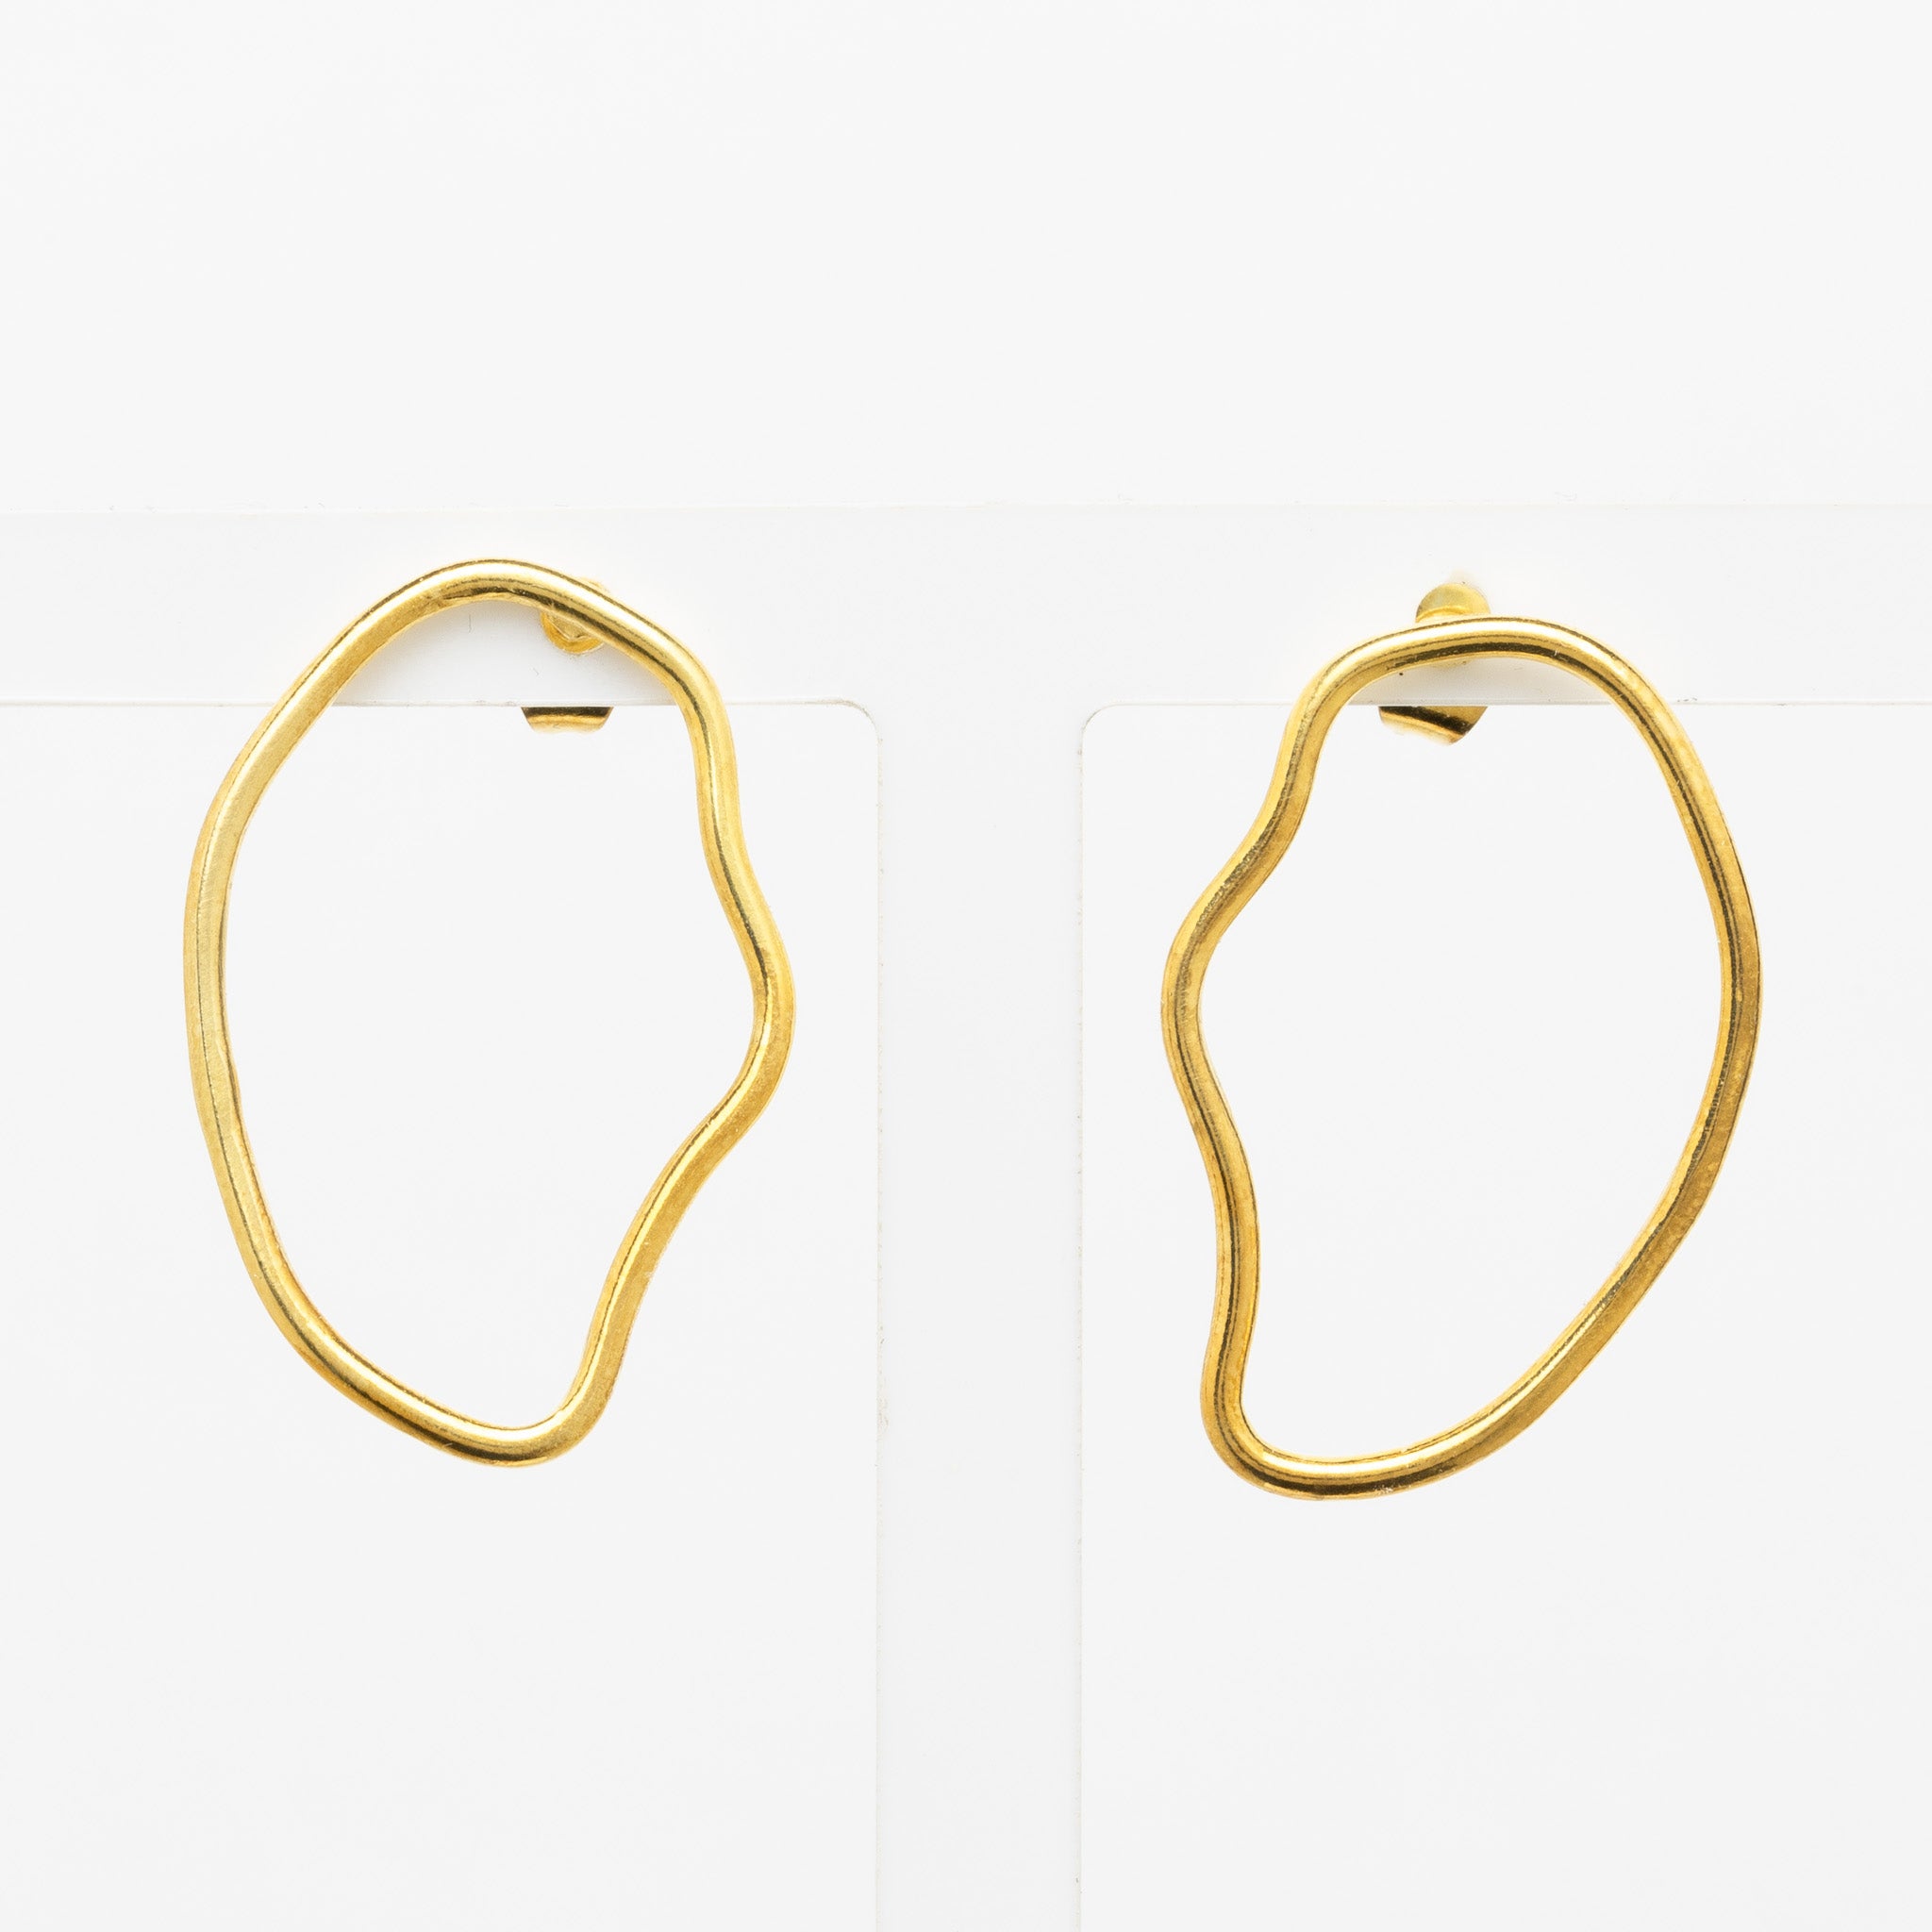 Organic Shaped Stud Earrings - gold